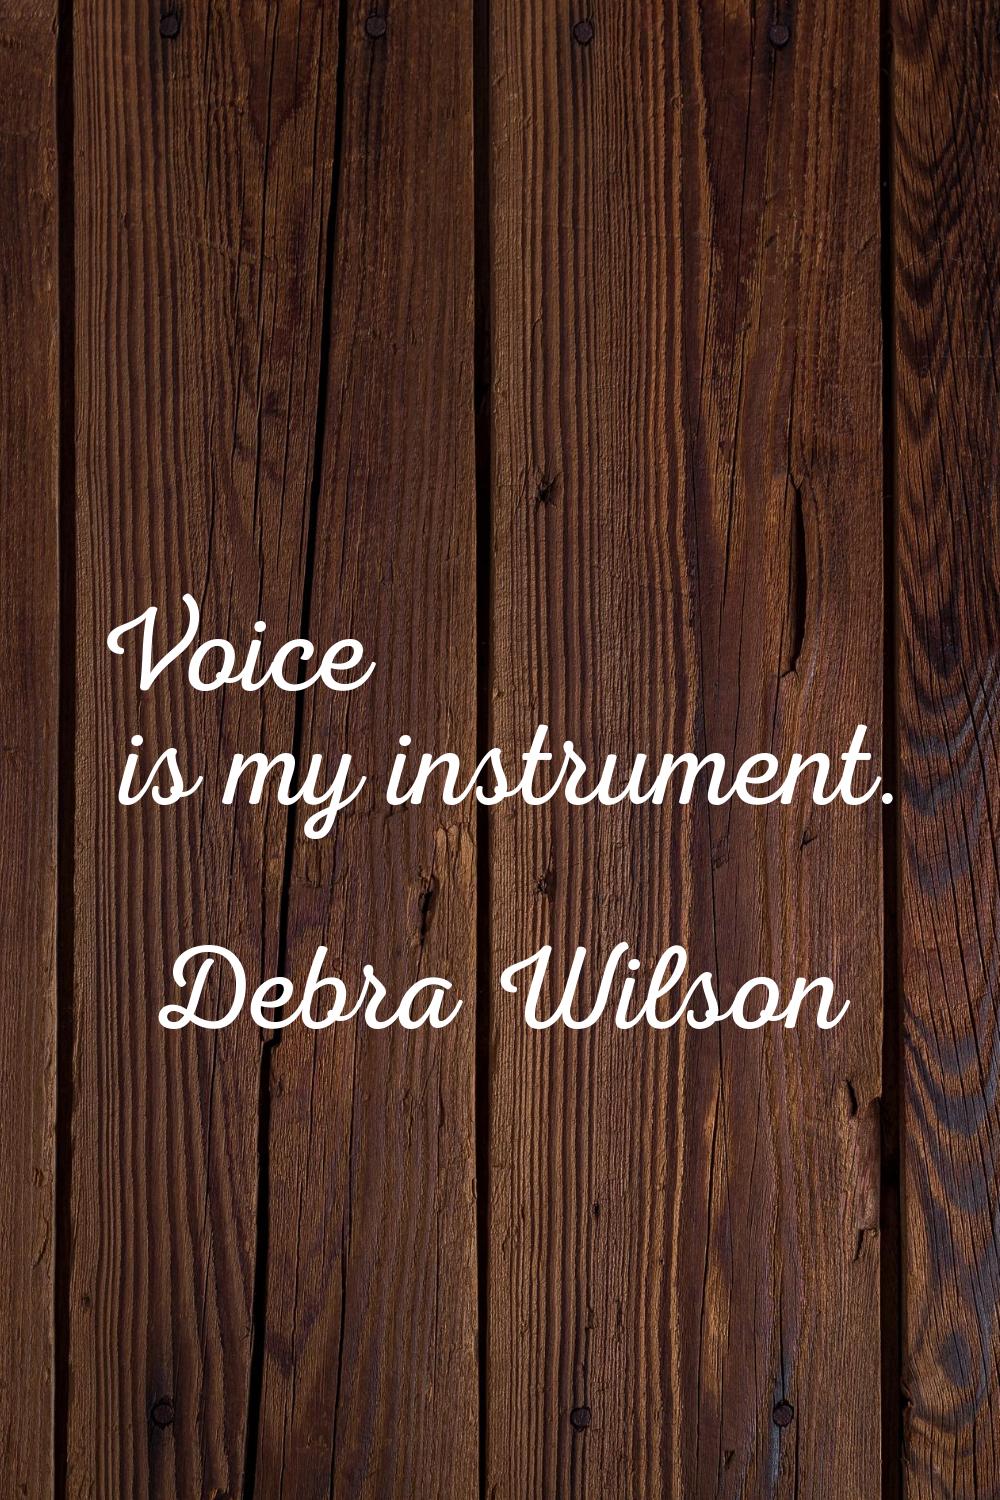 Voice is my instrument.